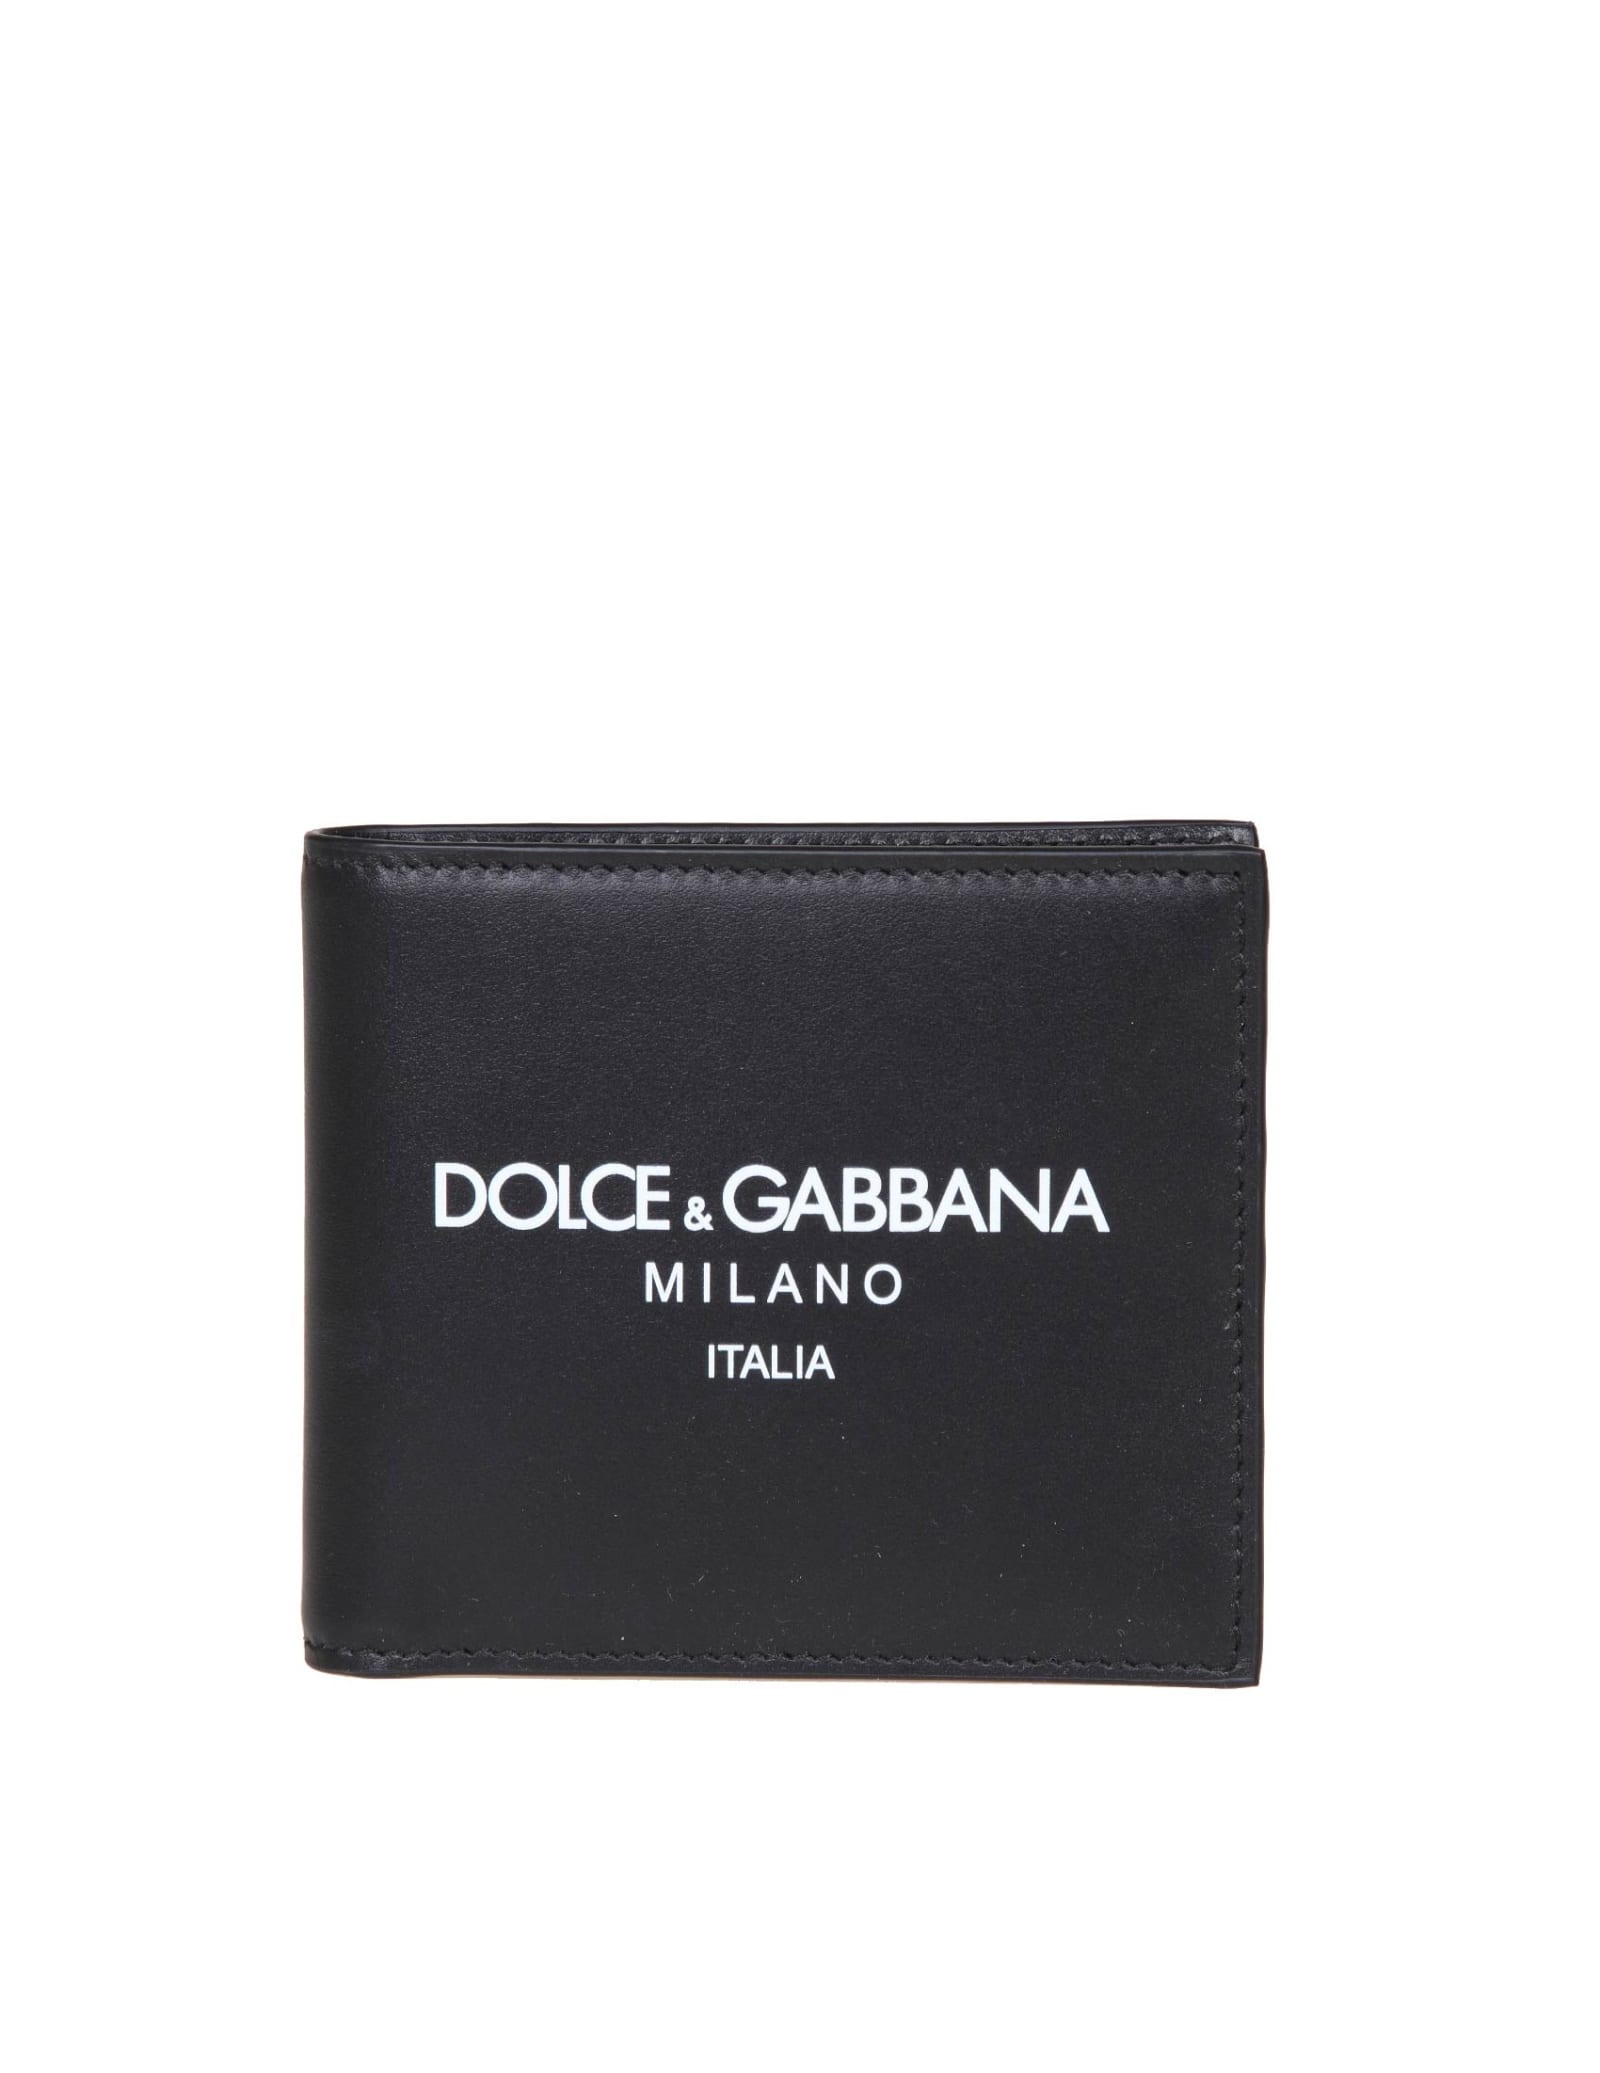 Dolce & Gabbana Wallet In Black Leather